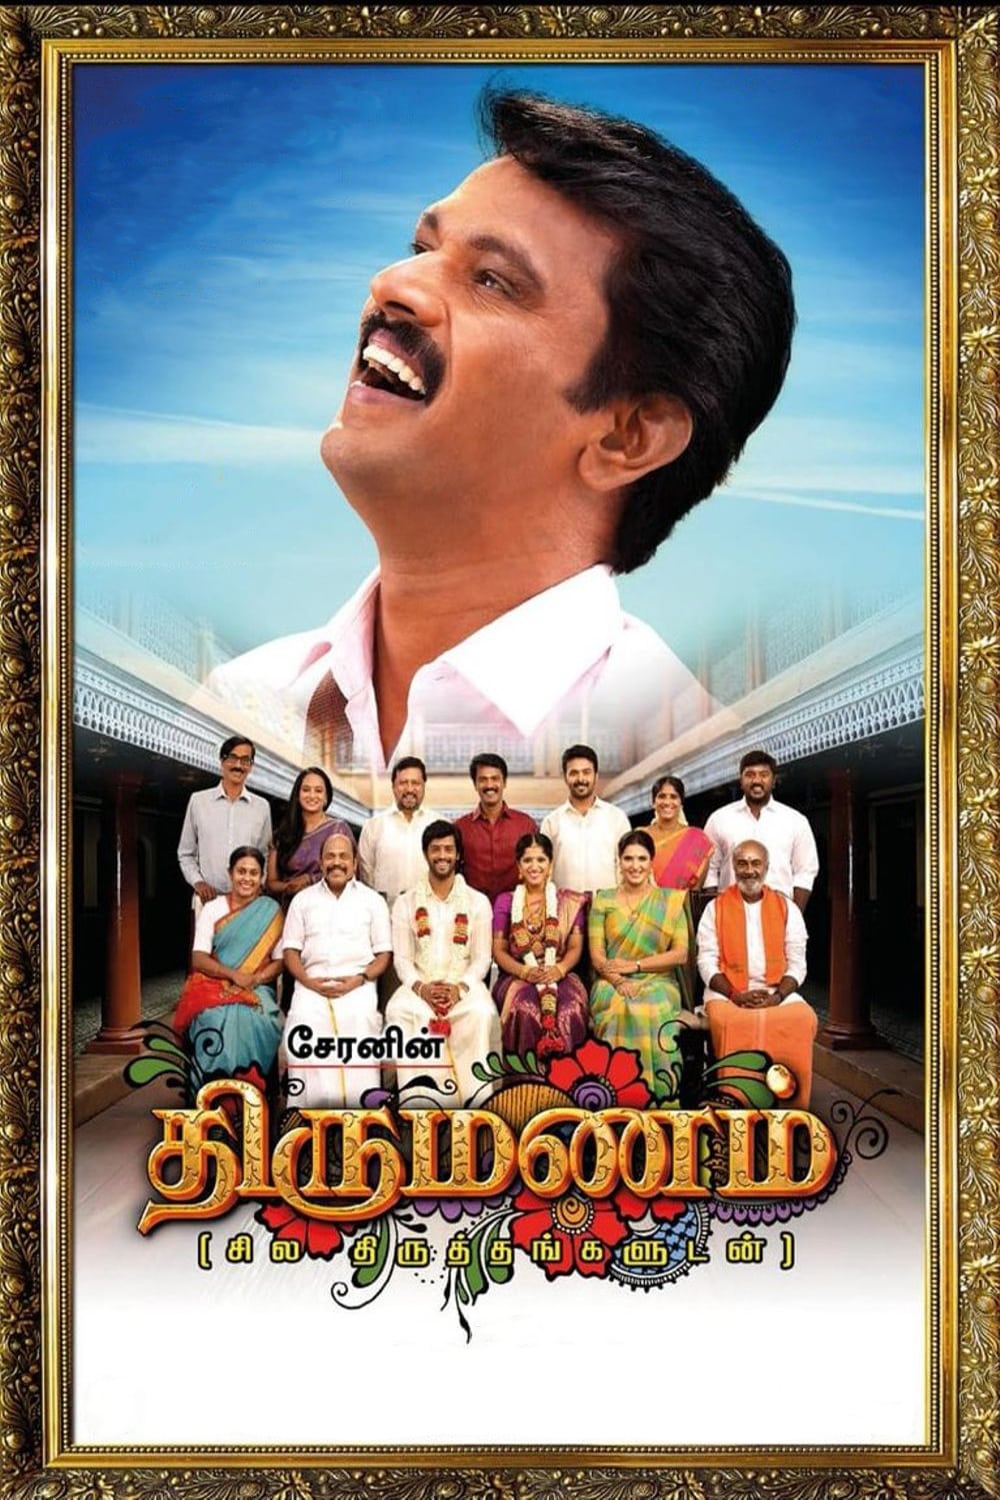 Poster for the movie "Thirumanam"